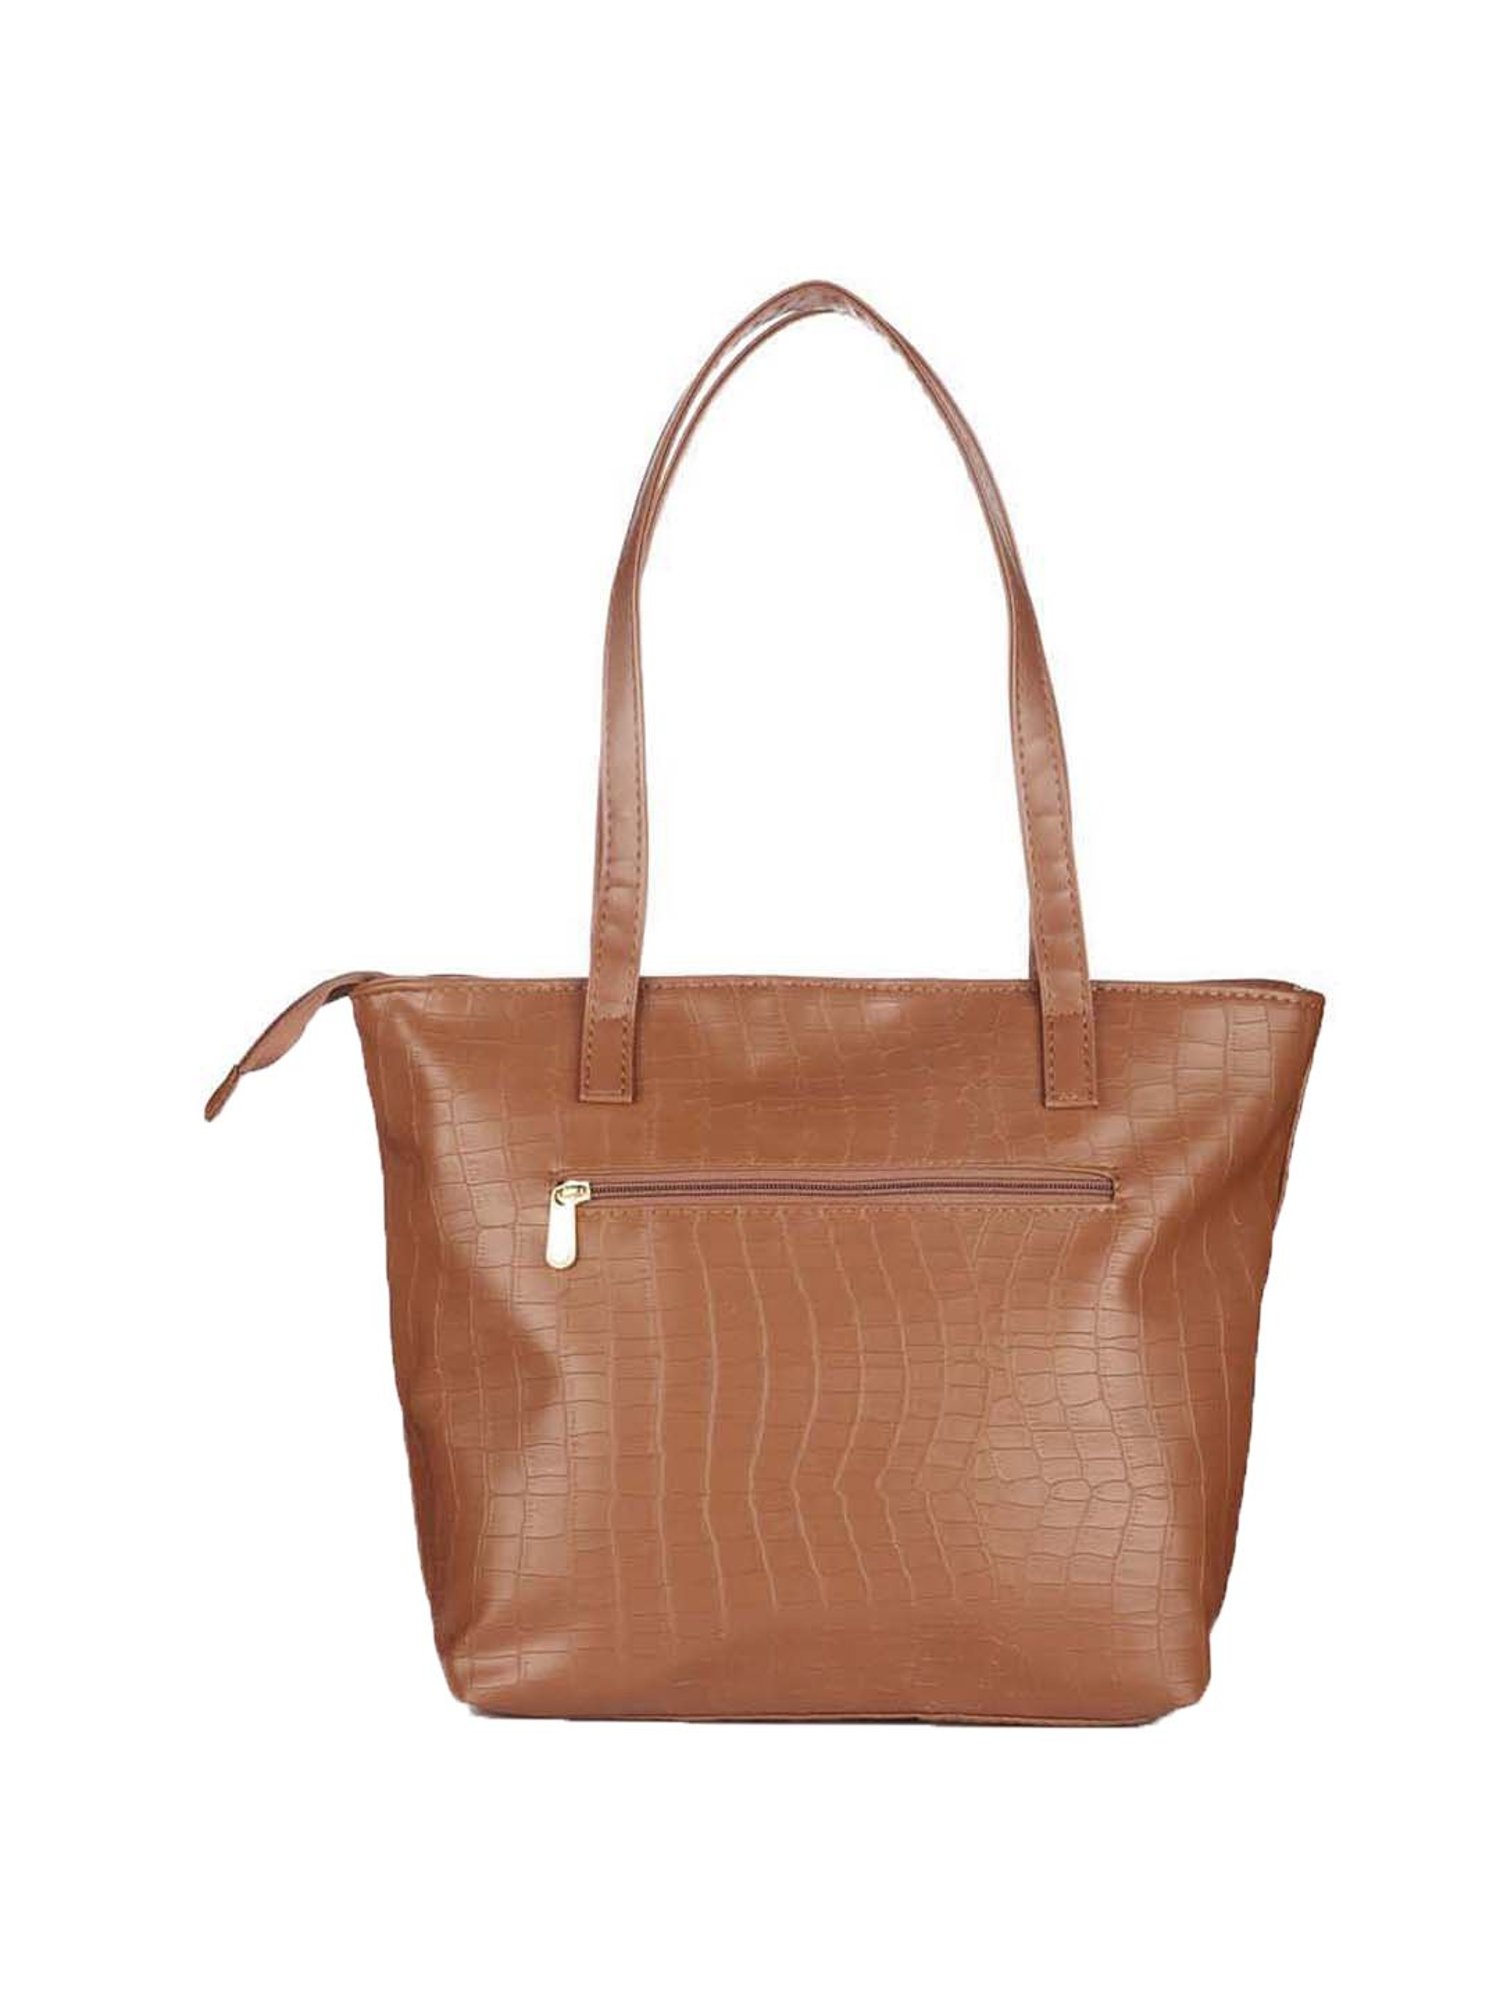 Buy Bellissa Maroon Textured Medium Snakeskin Handbag Online At Best Price  @ Tata CLiQ